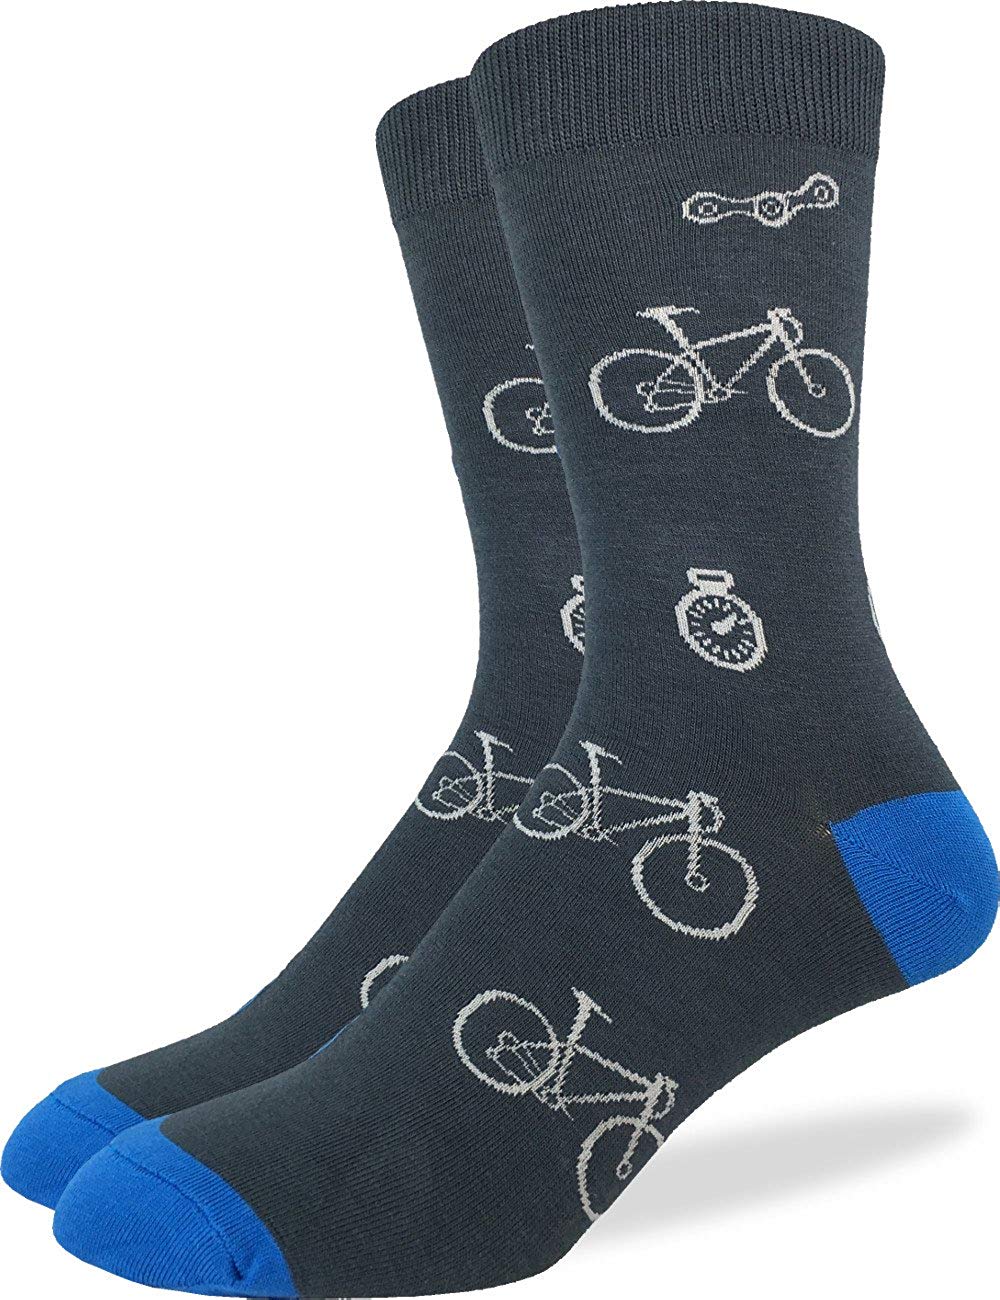 Good Luck Men's Bicycle Crew Socks